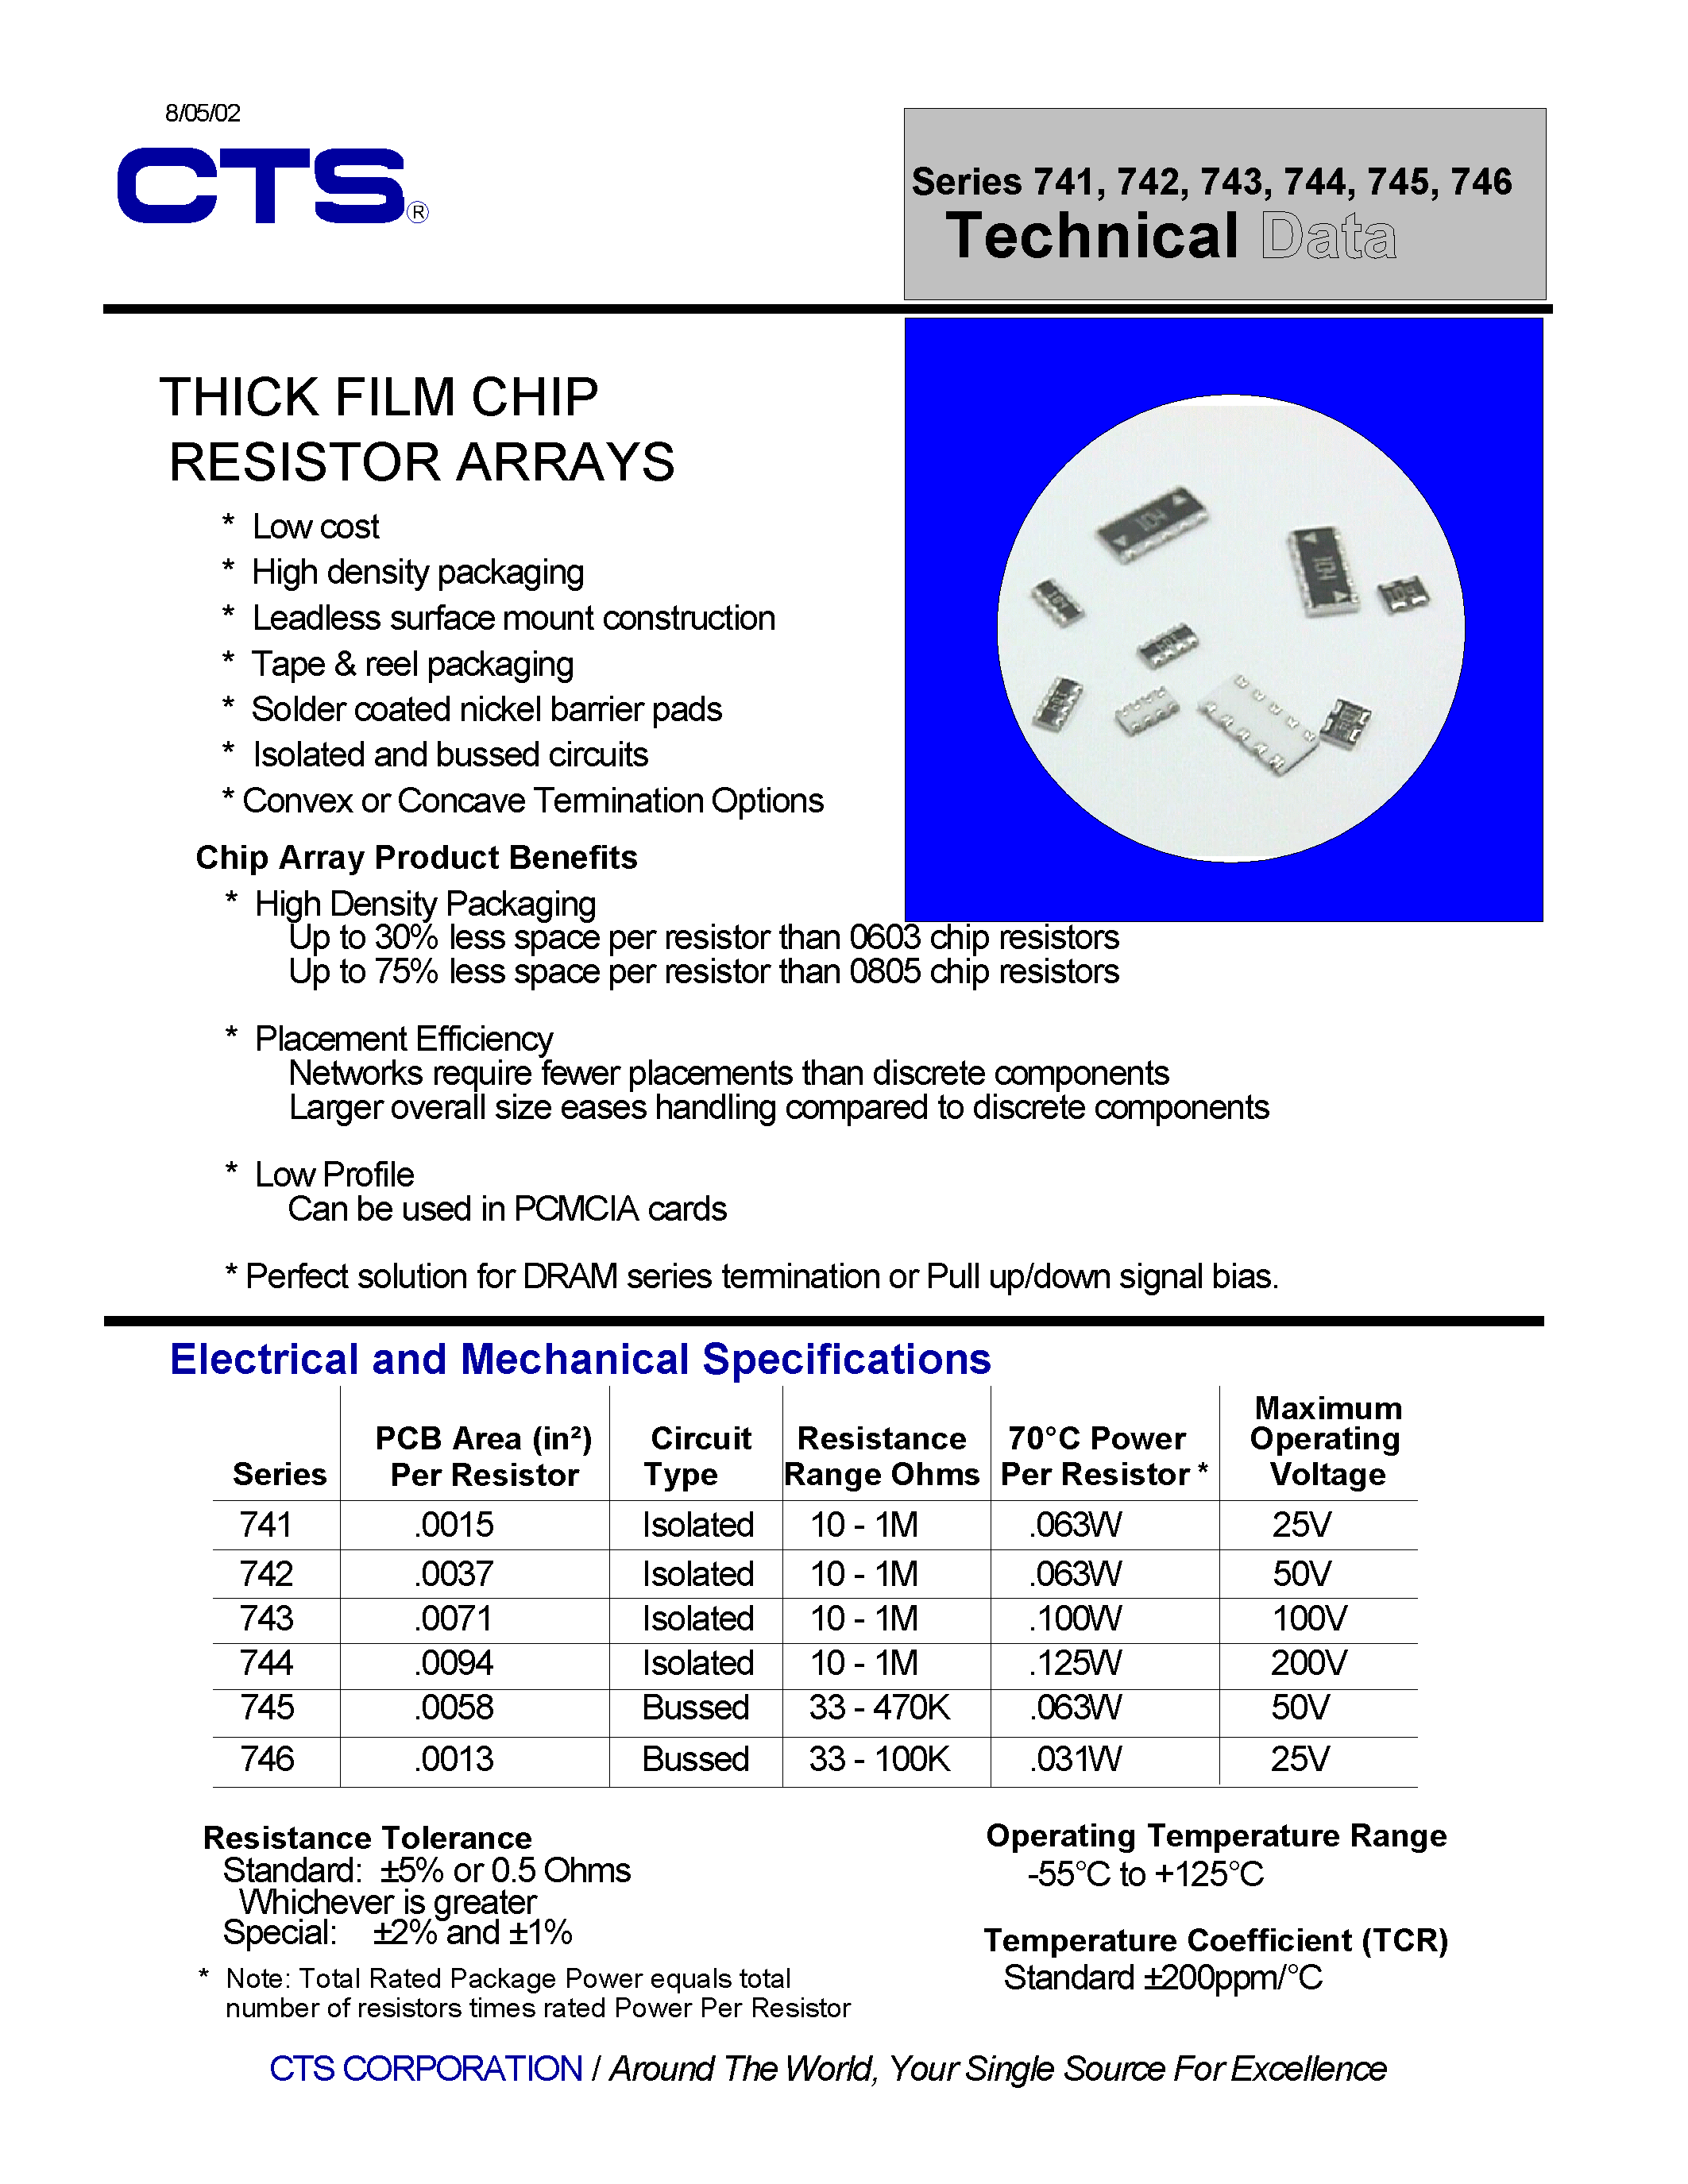 Даташит 741Cxxx - Thick Film Chip Resistor Arrays страница 1